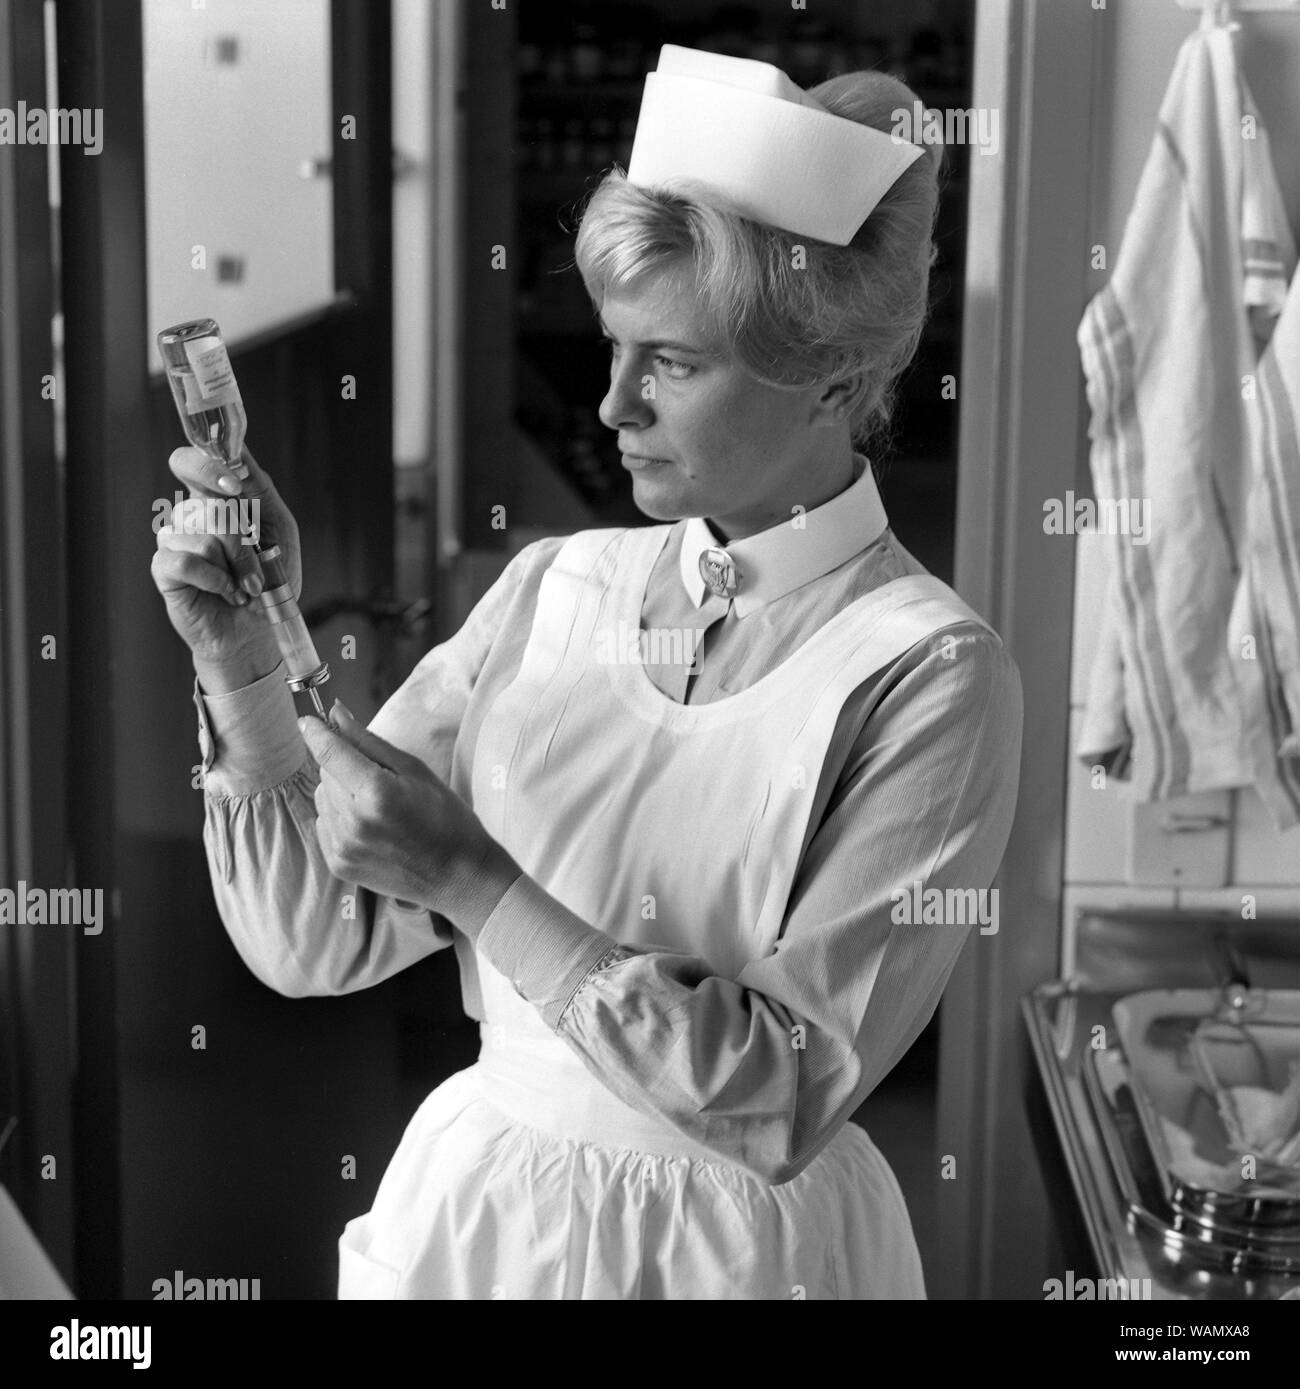 Nurse In The 1960s A Woman In A Nurse Uniform Is Preparing An